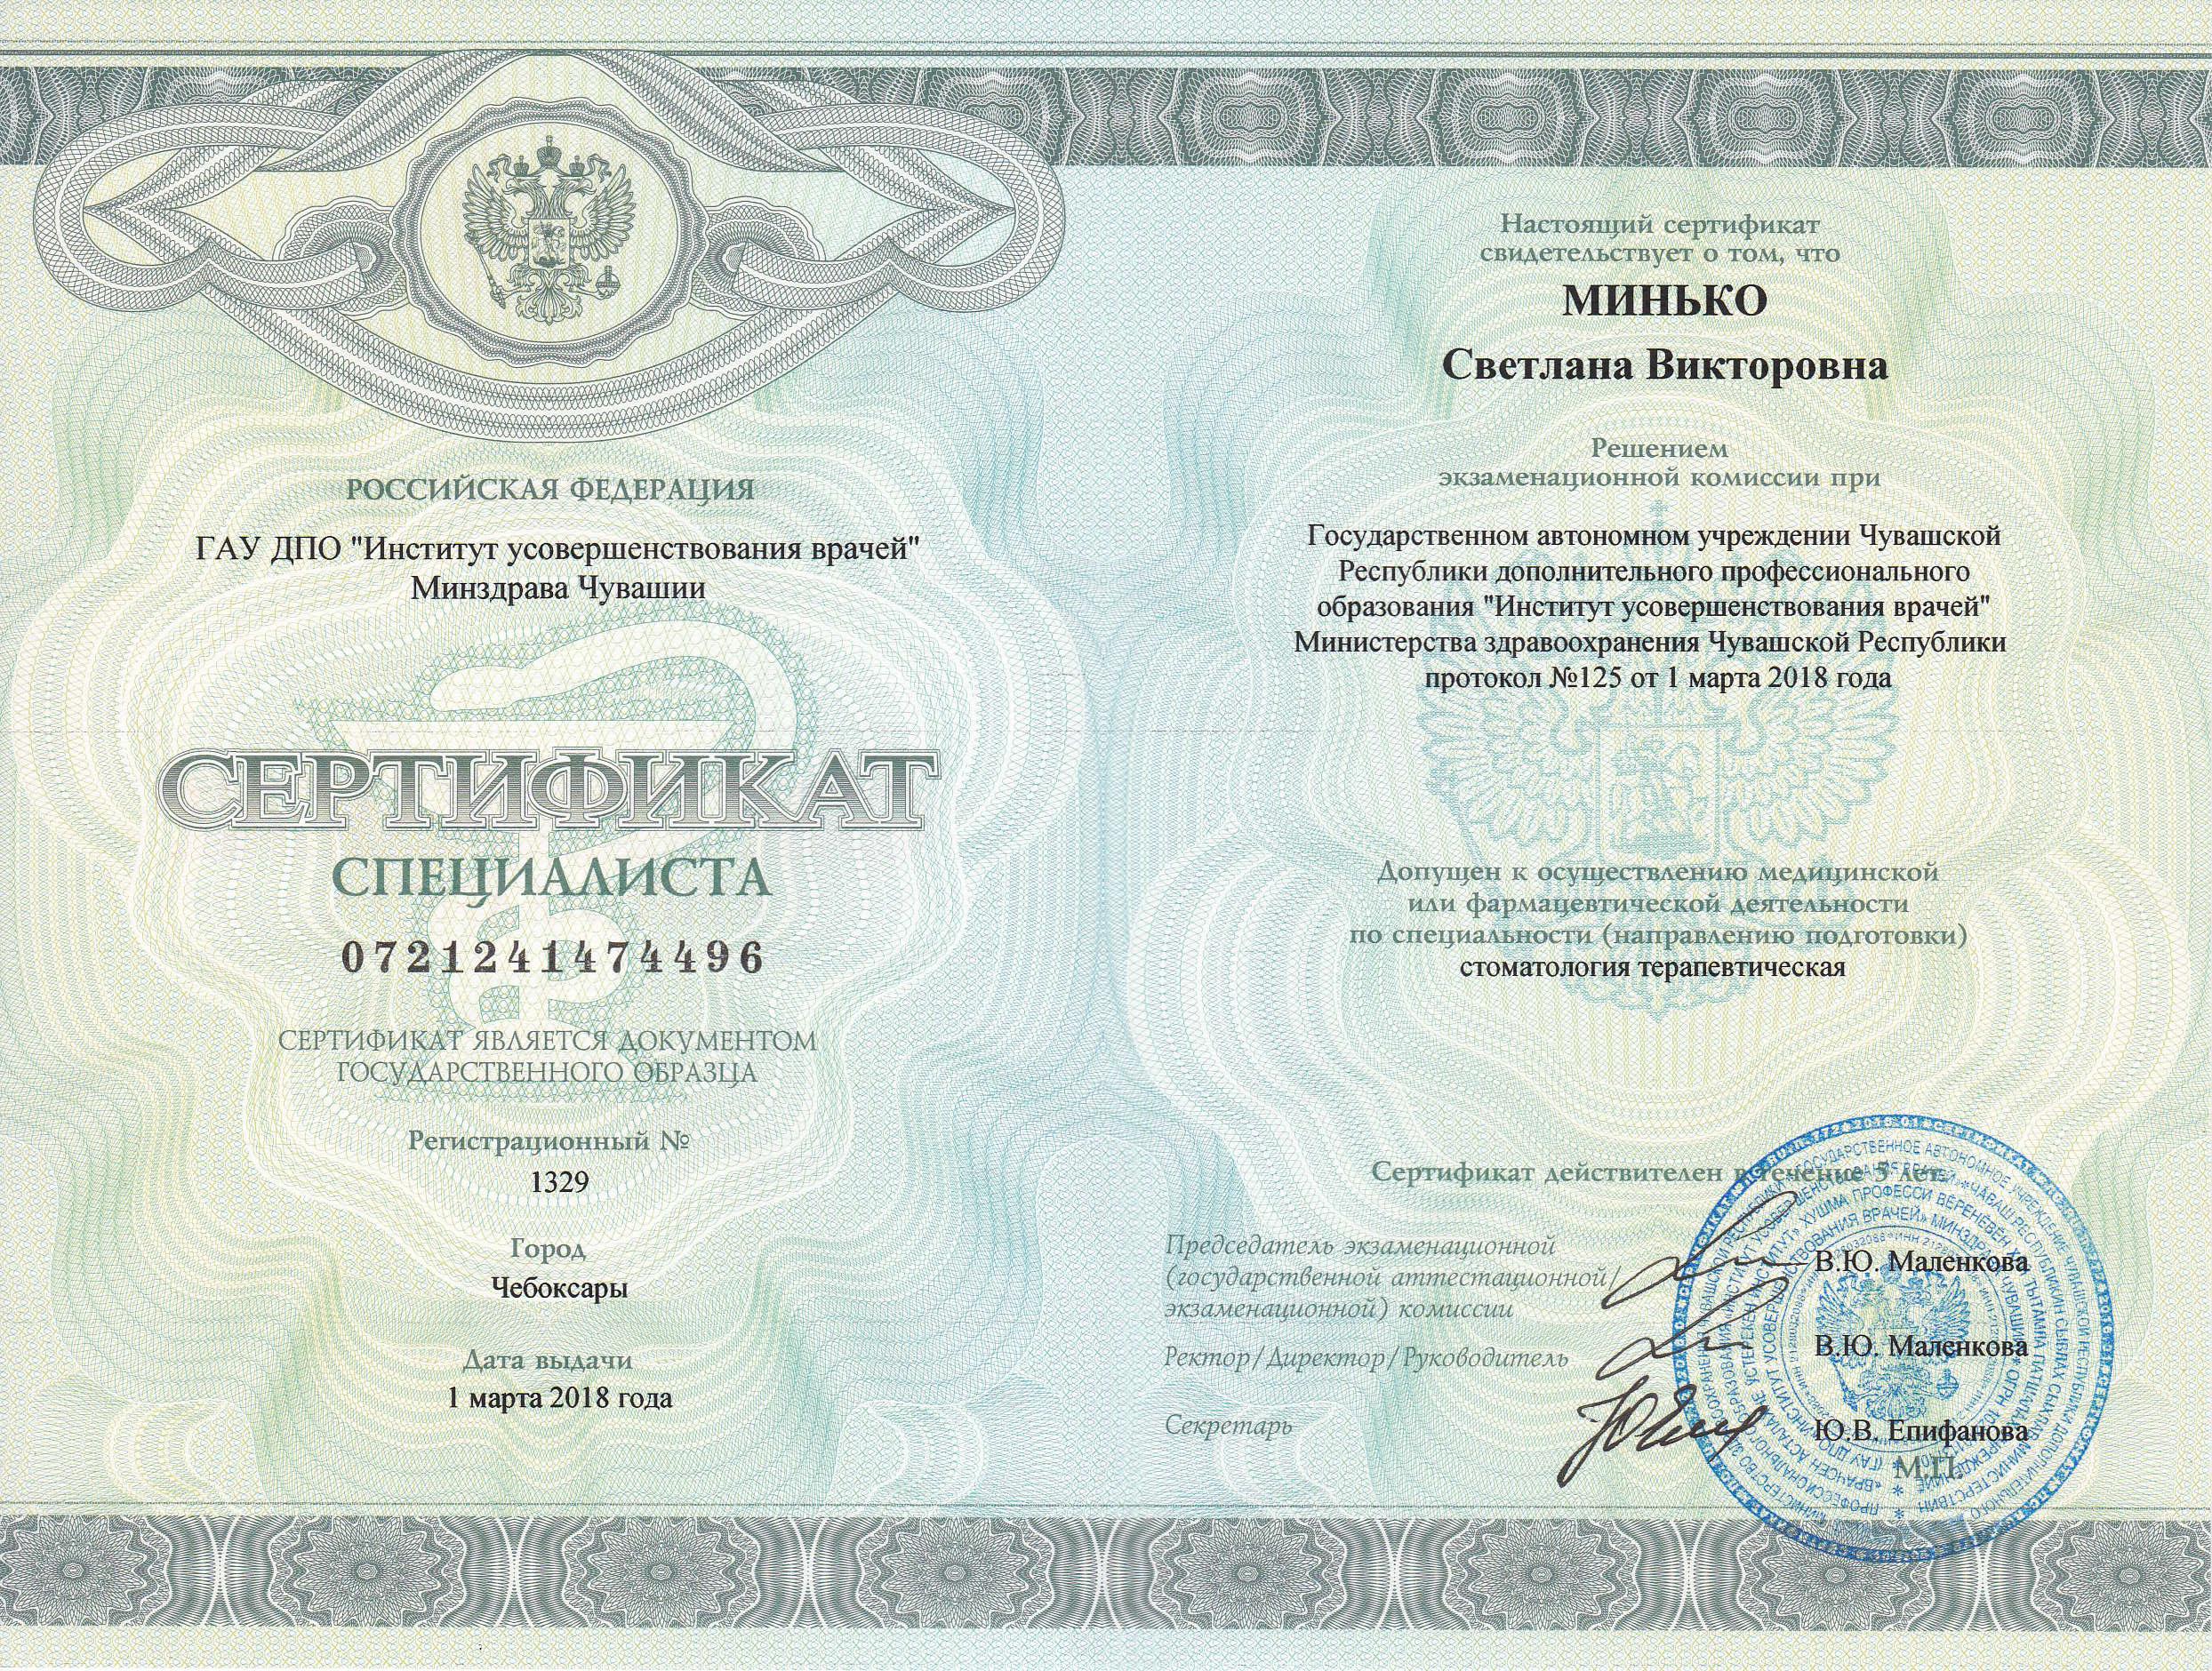 Сертификат - Минько Светлана